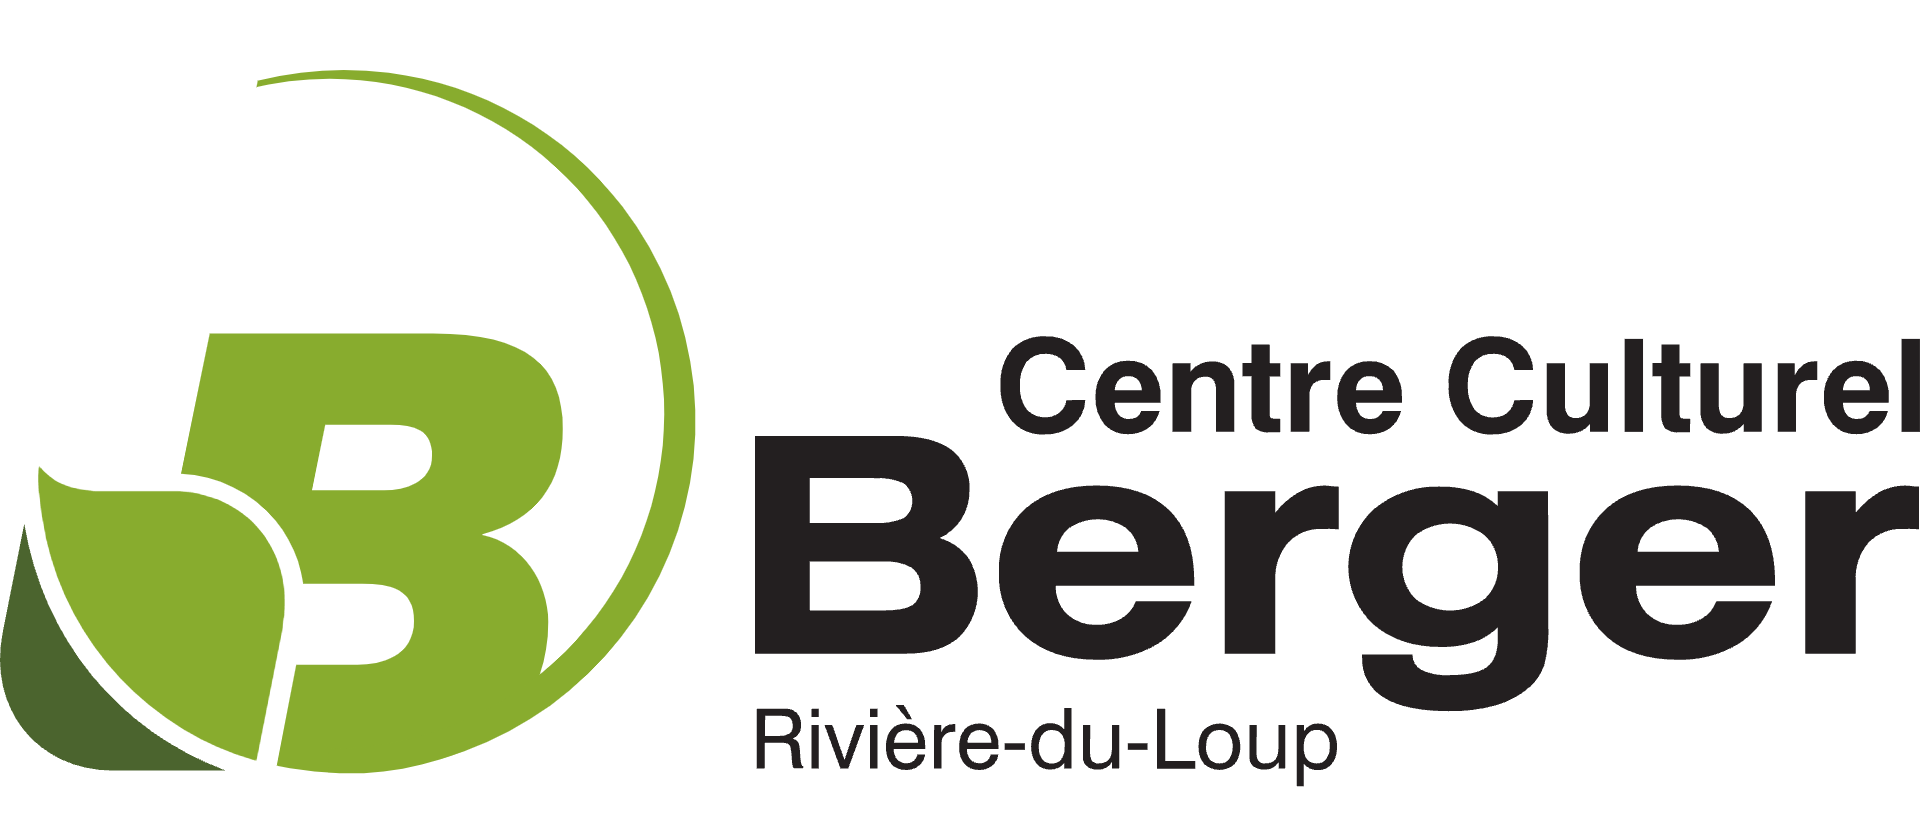 Logo of the Centre Culturel Berger